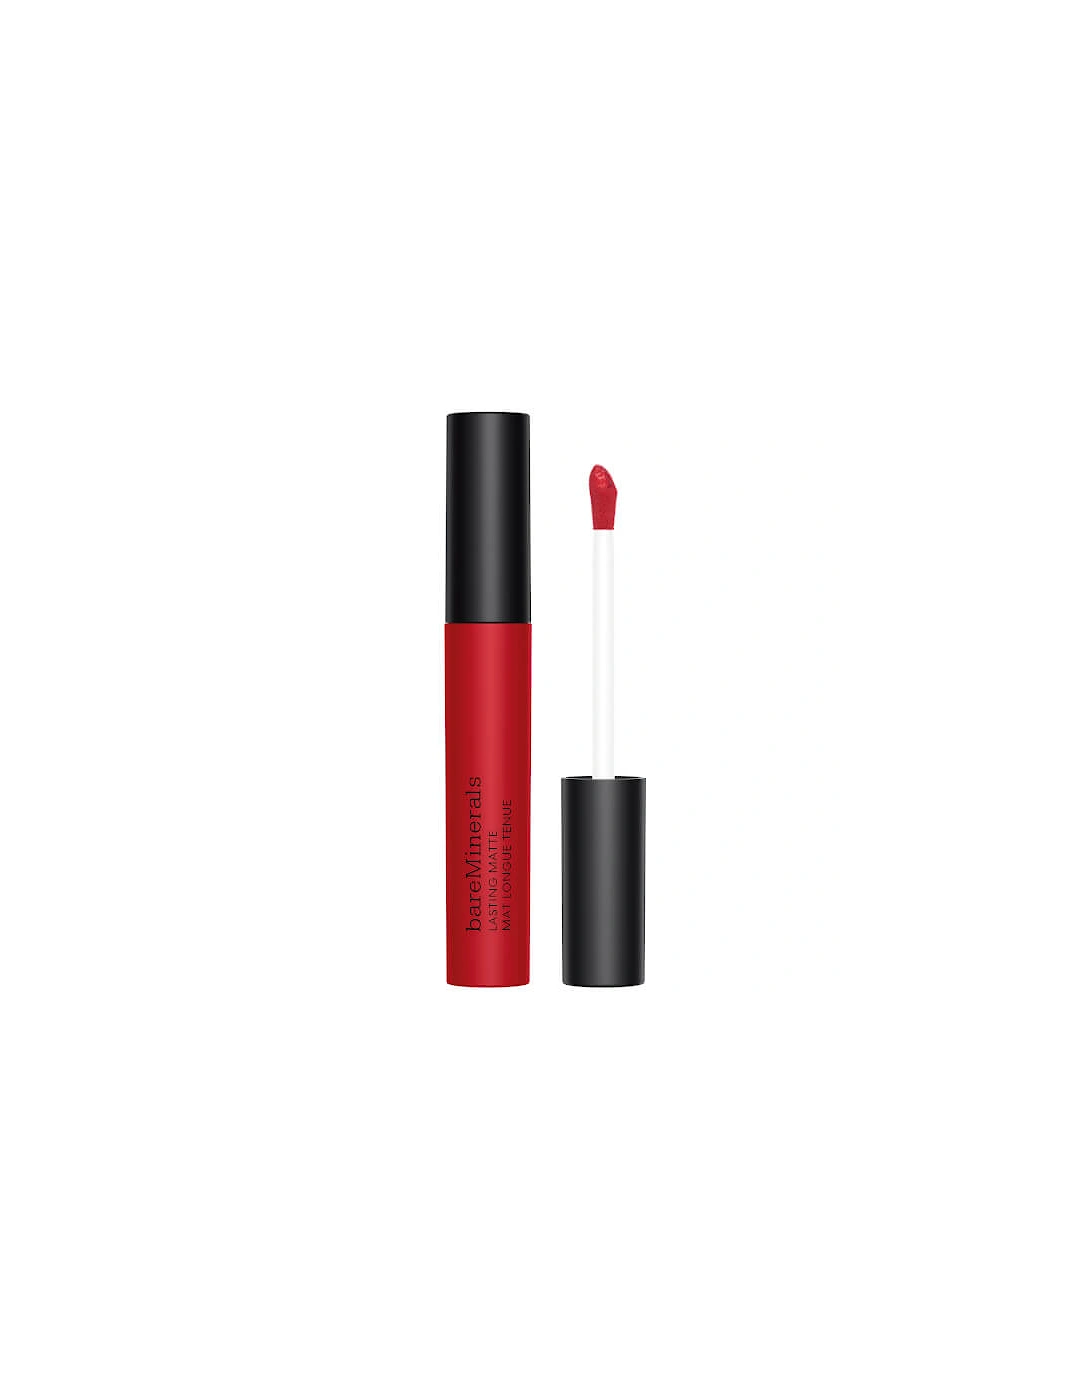 Mineralist Comfort Matte Liquid Lipstick - Royal, 2 of 1